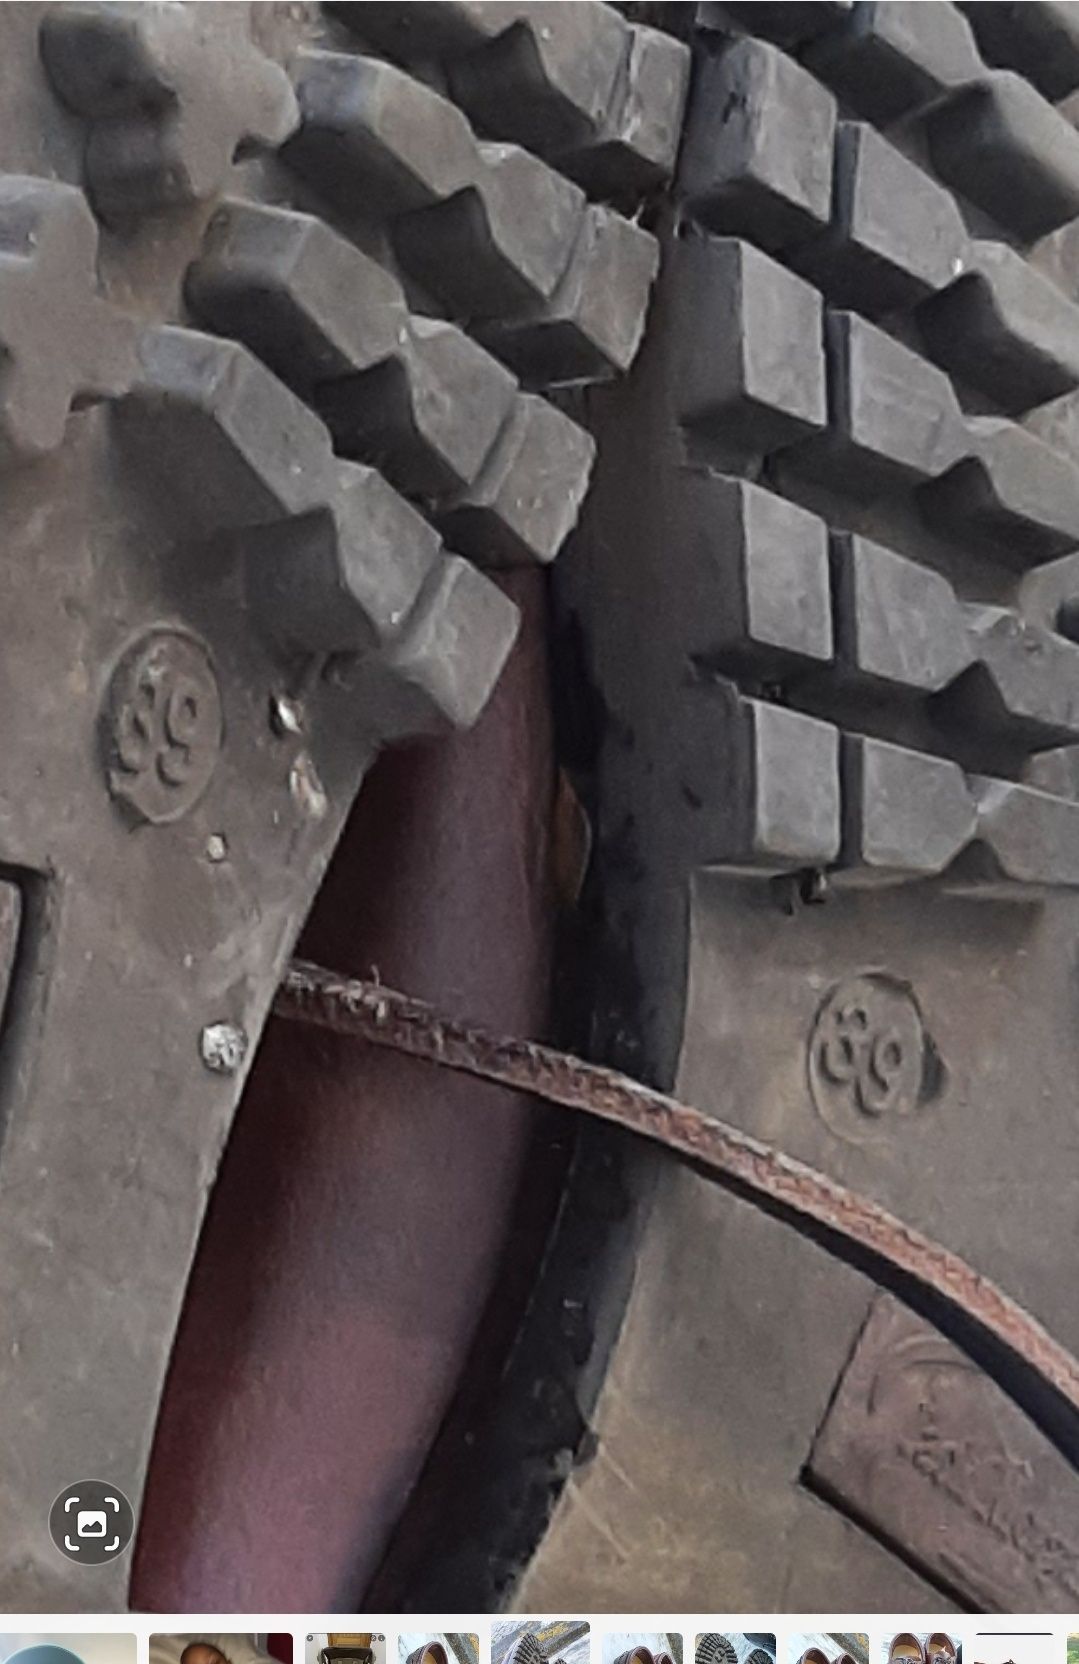 Sapato Vela Jack Morgan N° 39 Bom Estado Entrego em  Alfragide